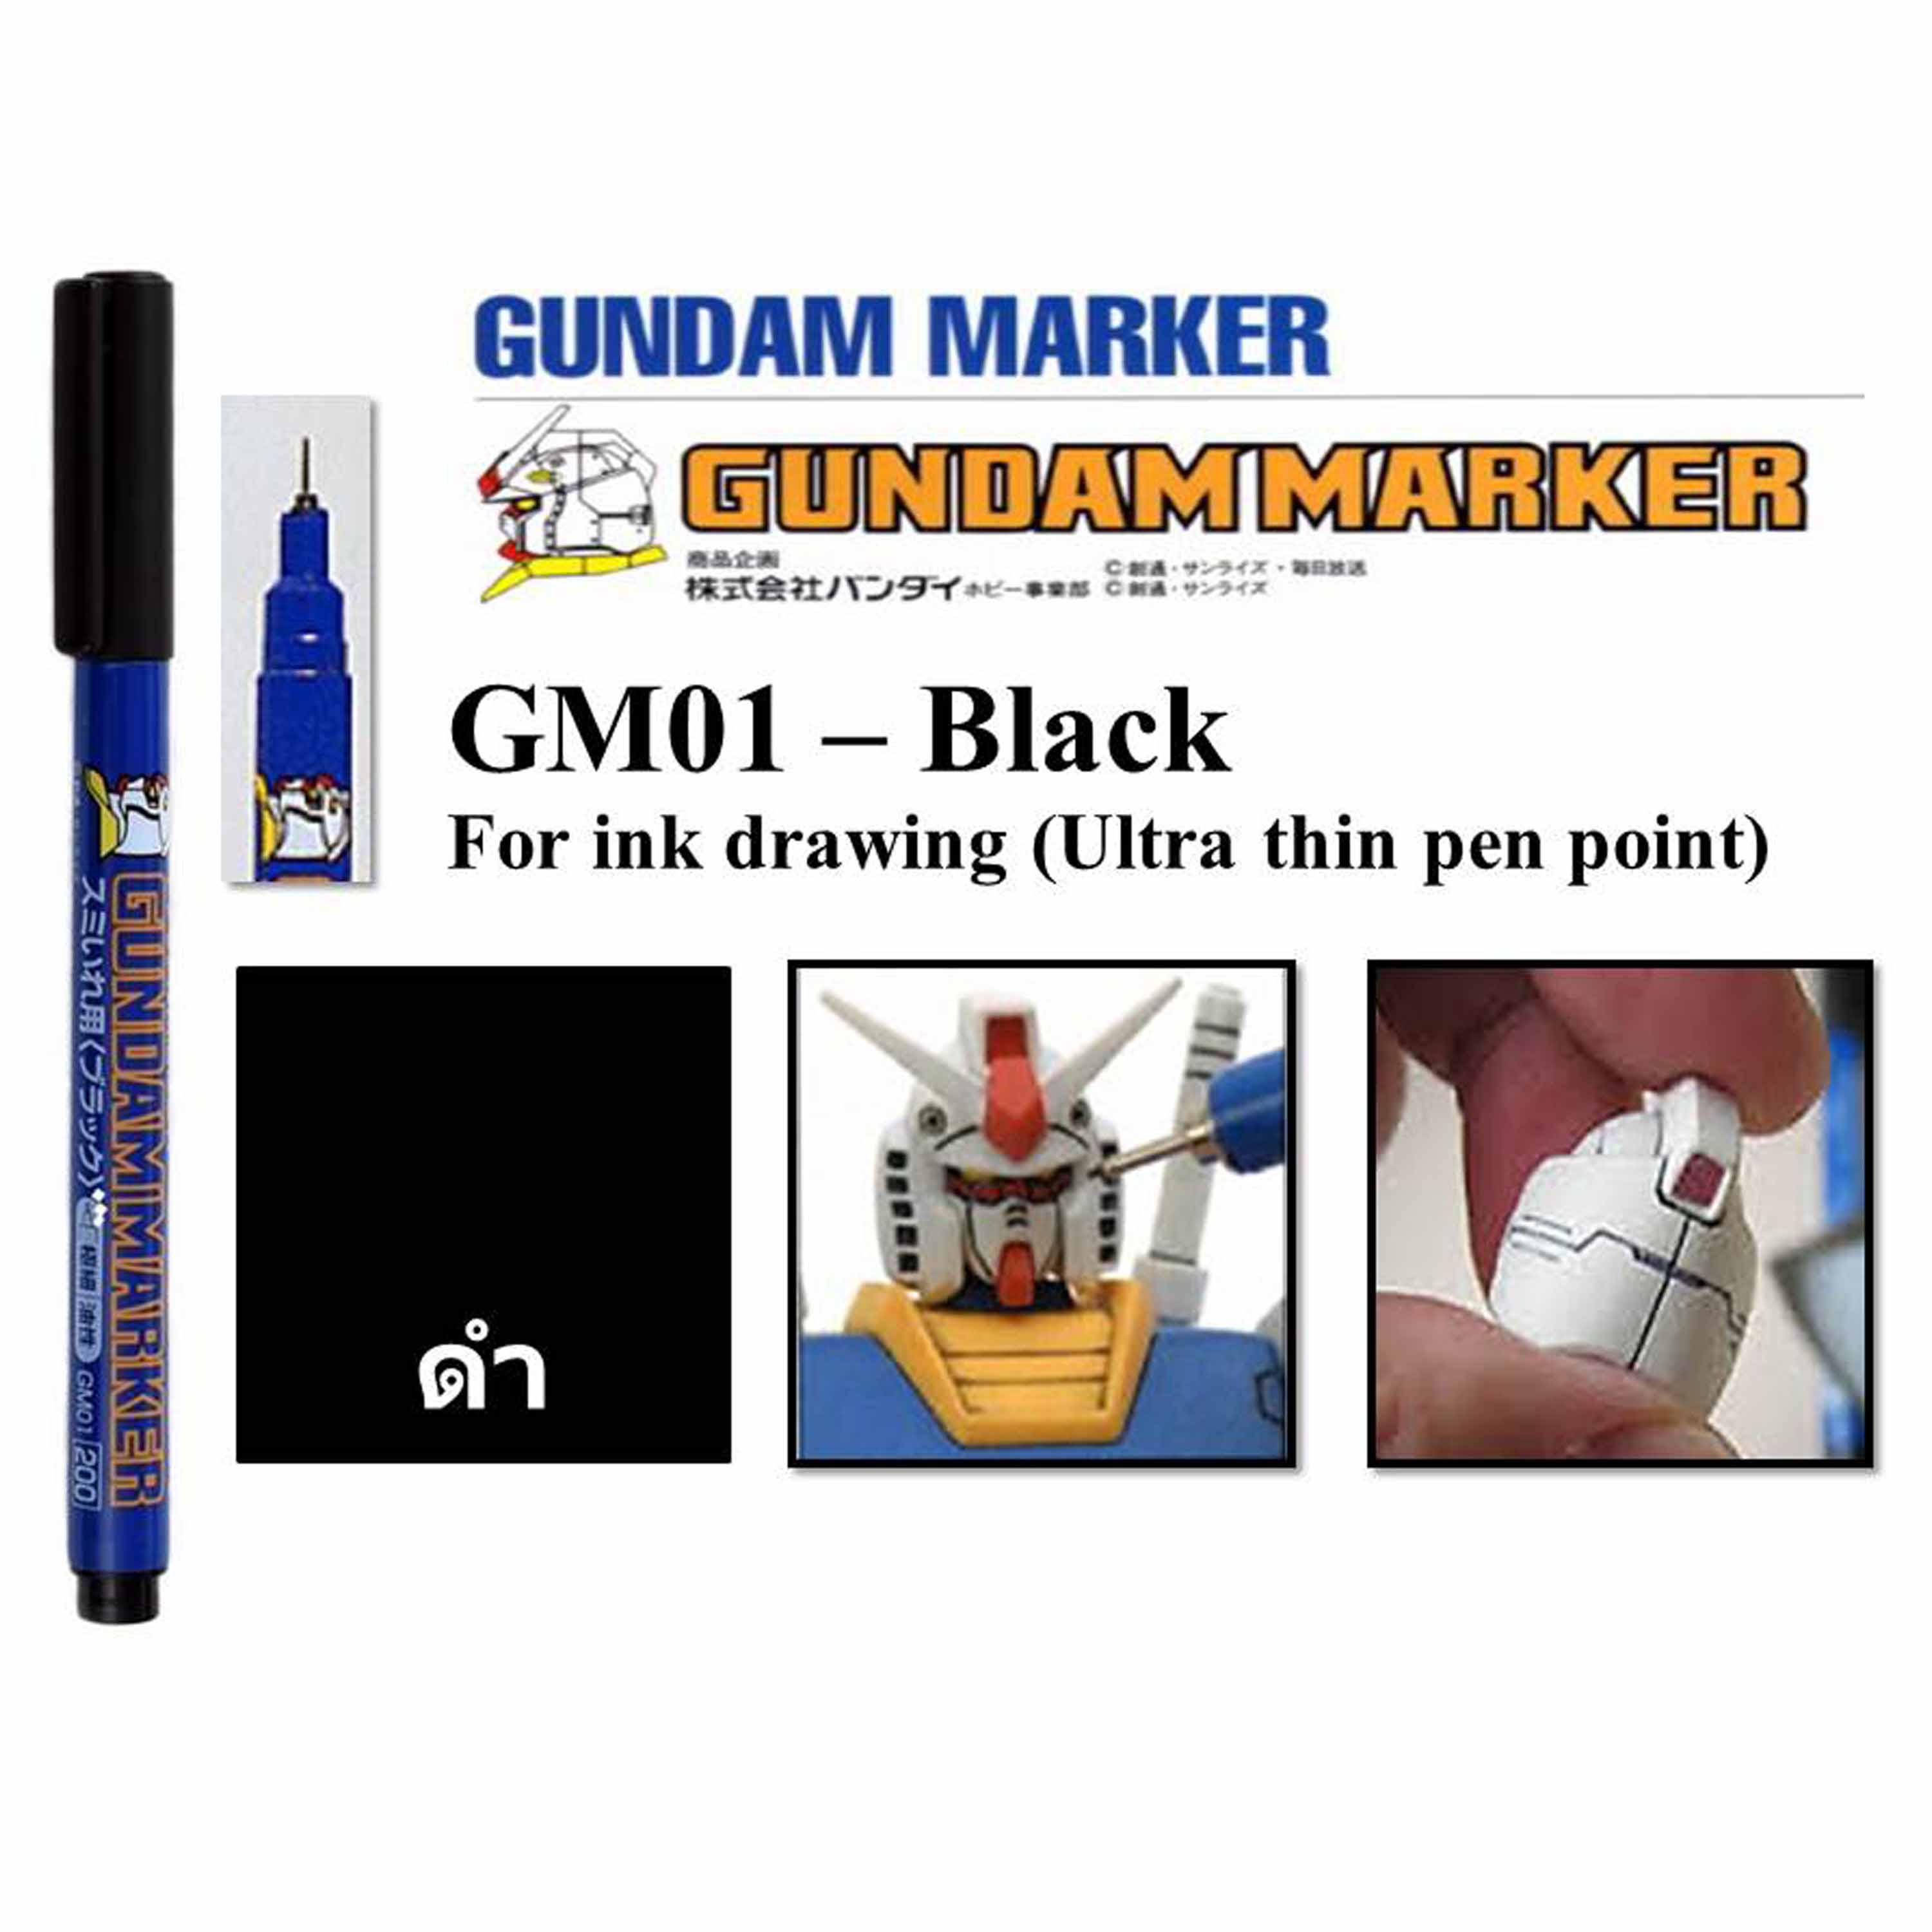 Gundam Maker GM01